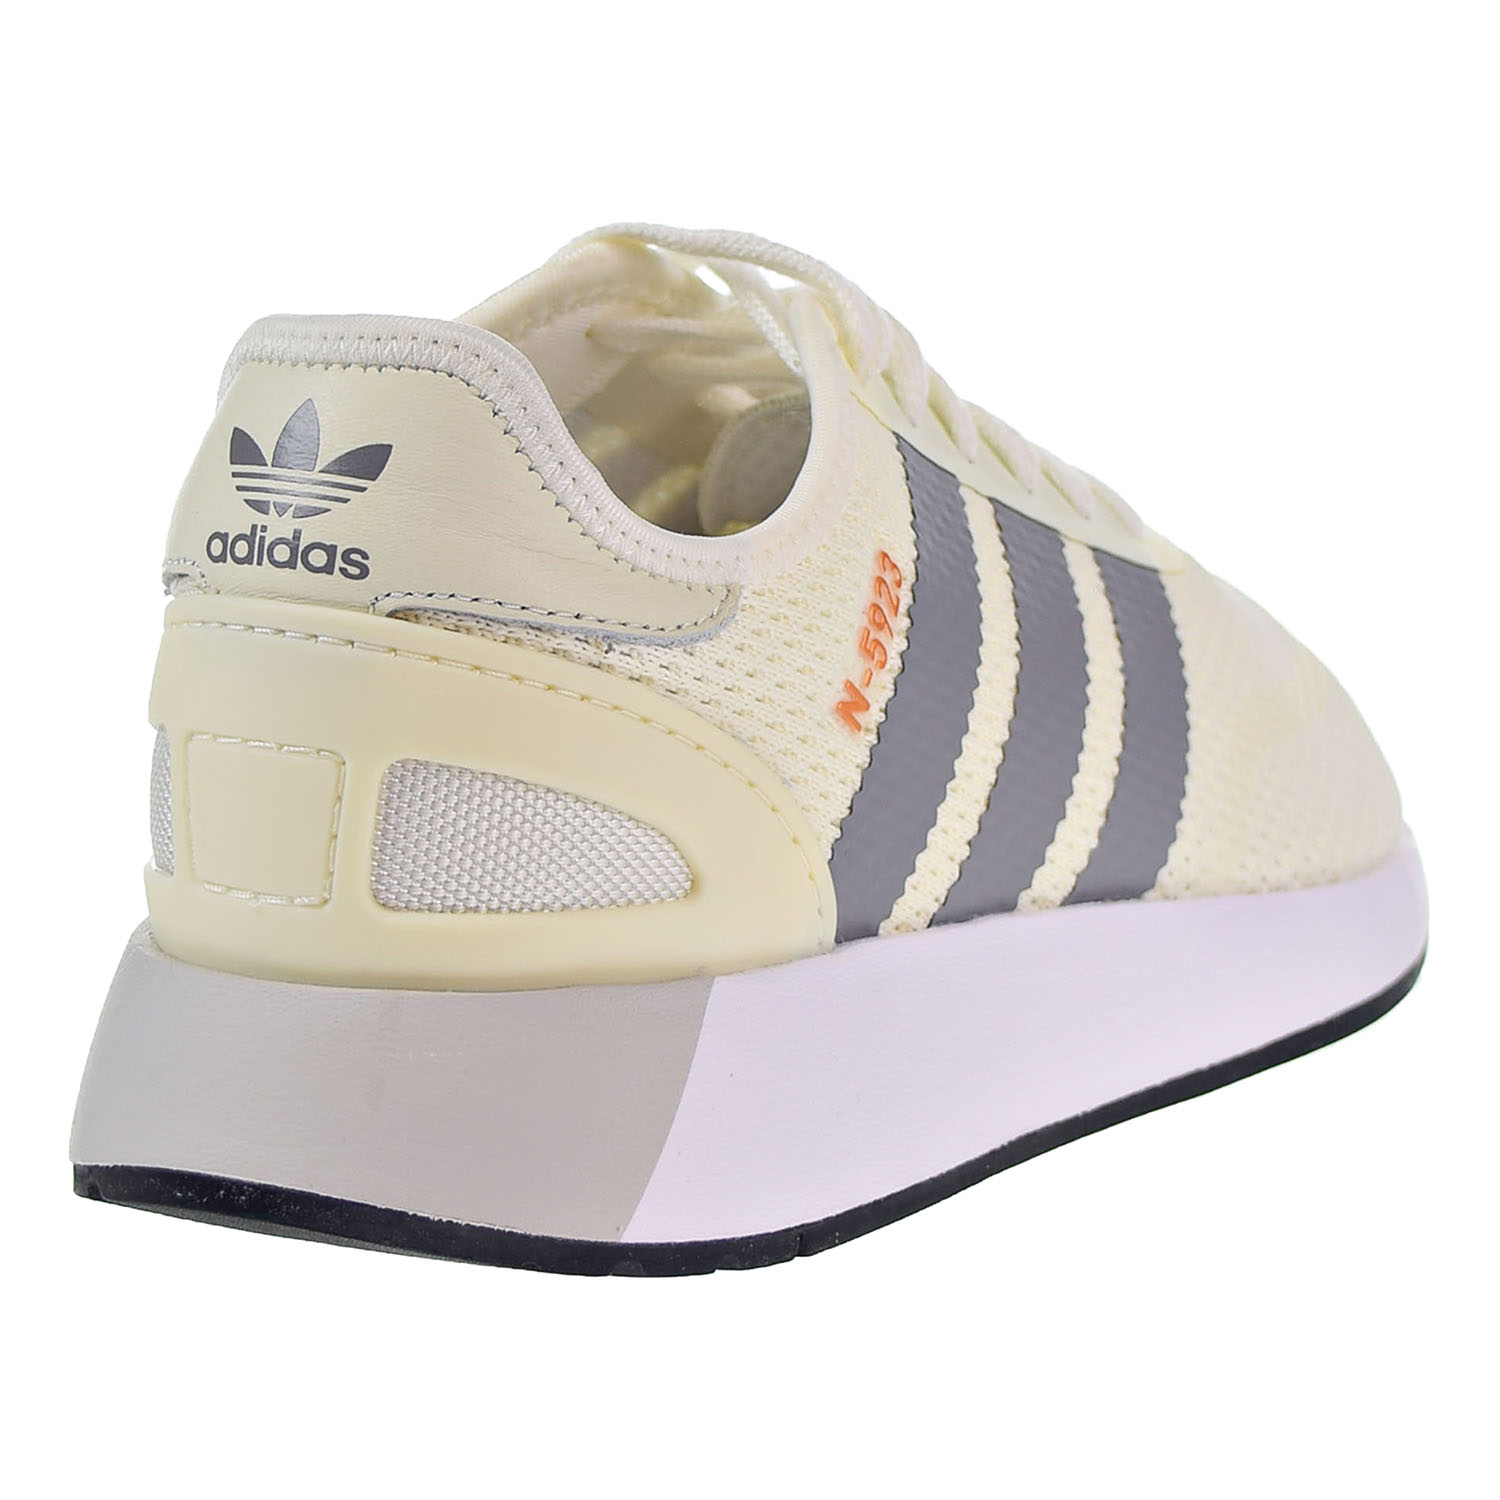 Adidas N-5923 Men's Shoes Off White-Grey Three-Grey Three db0958